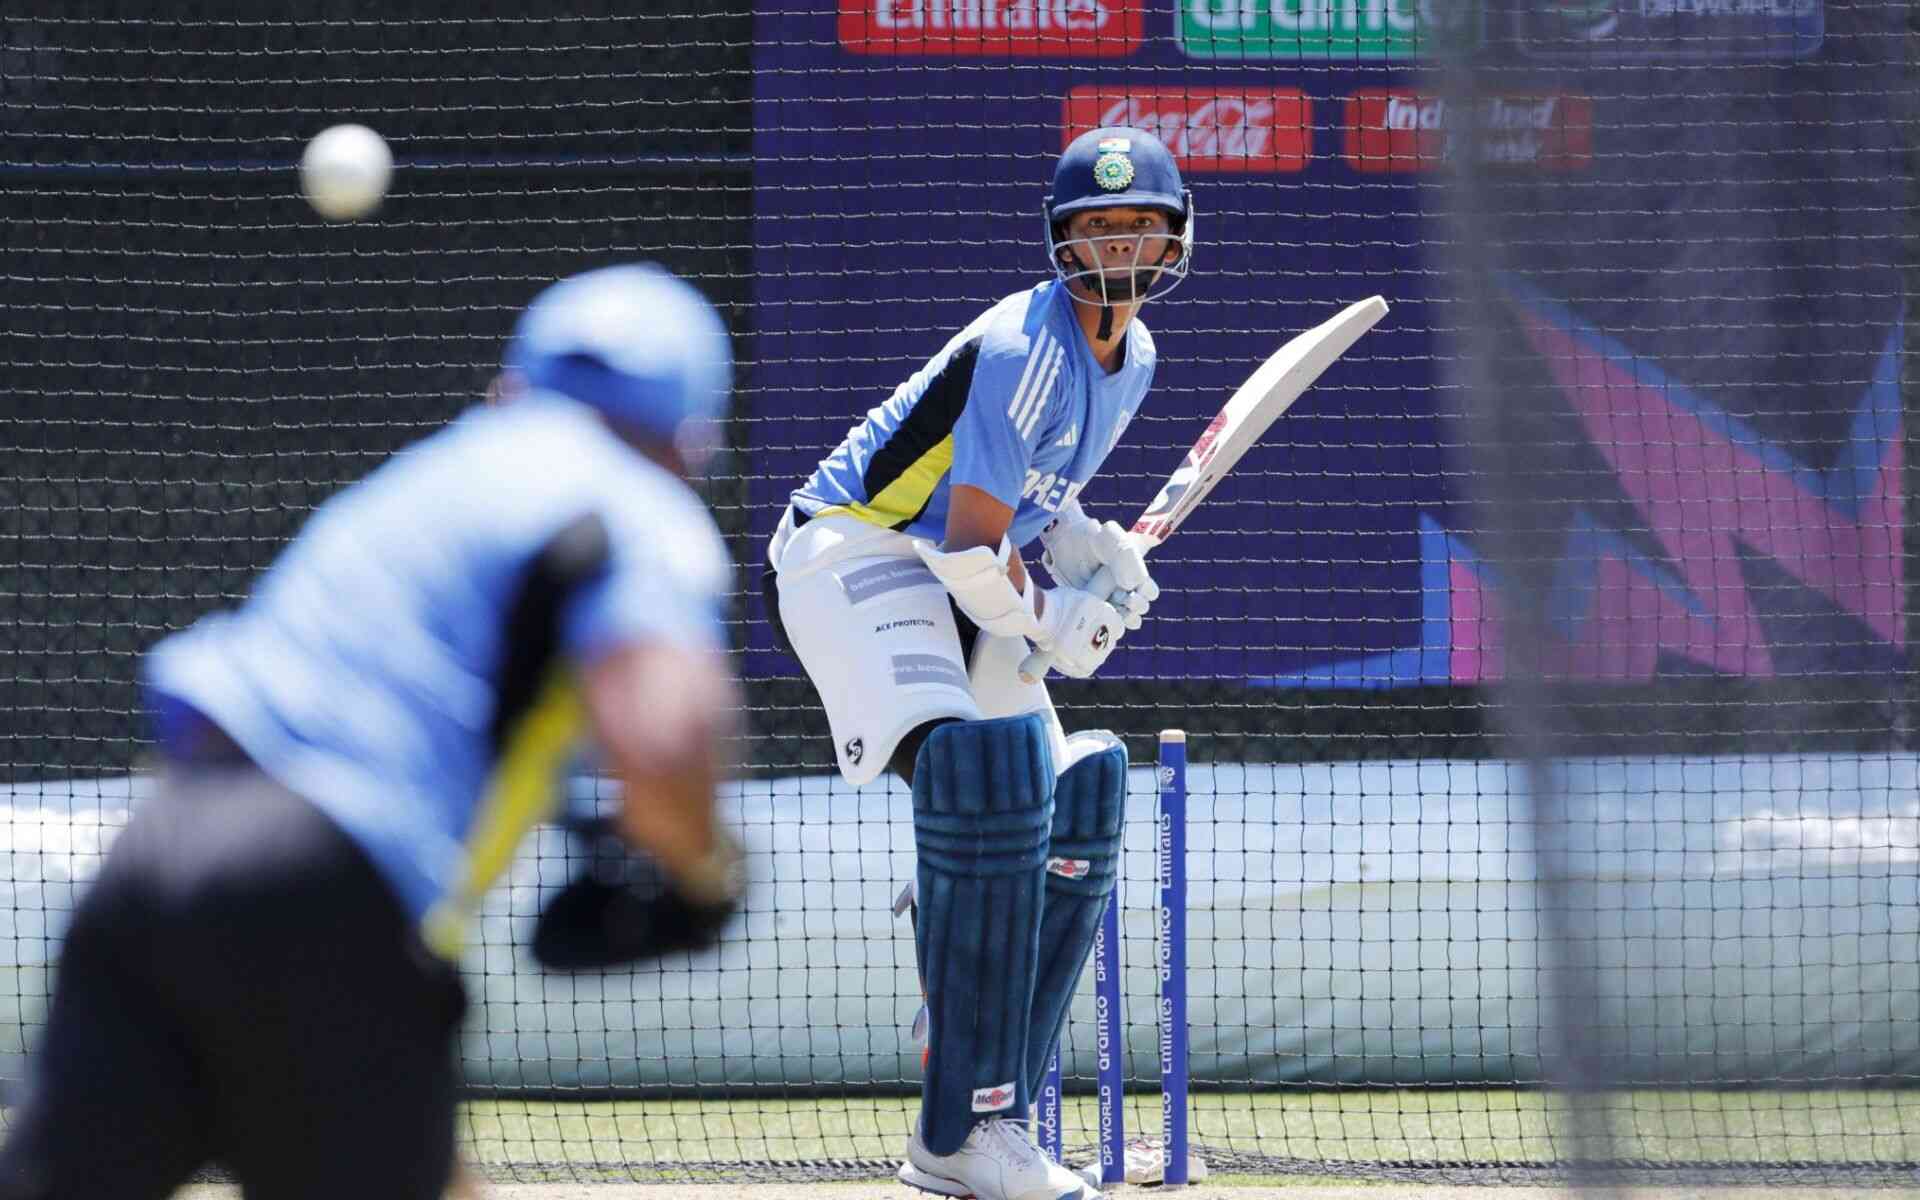 Yashasvi Jaiswal batting in nets (X.com)